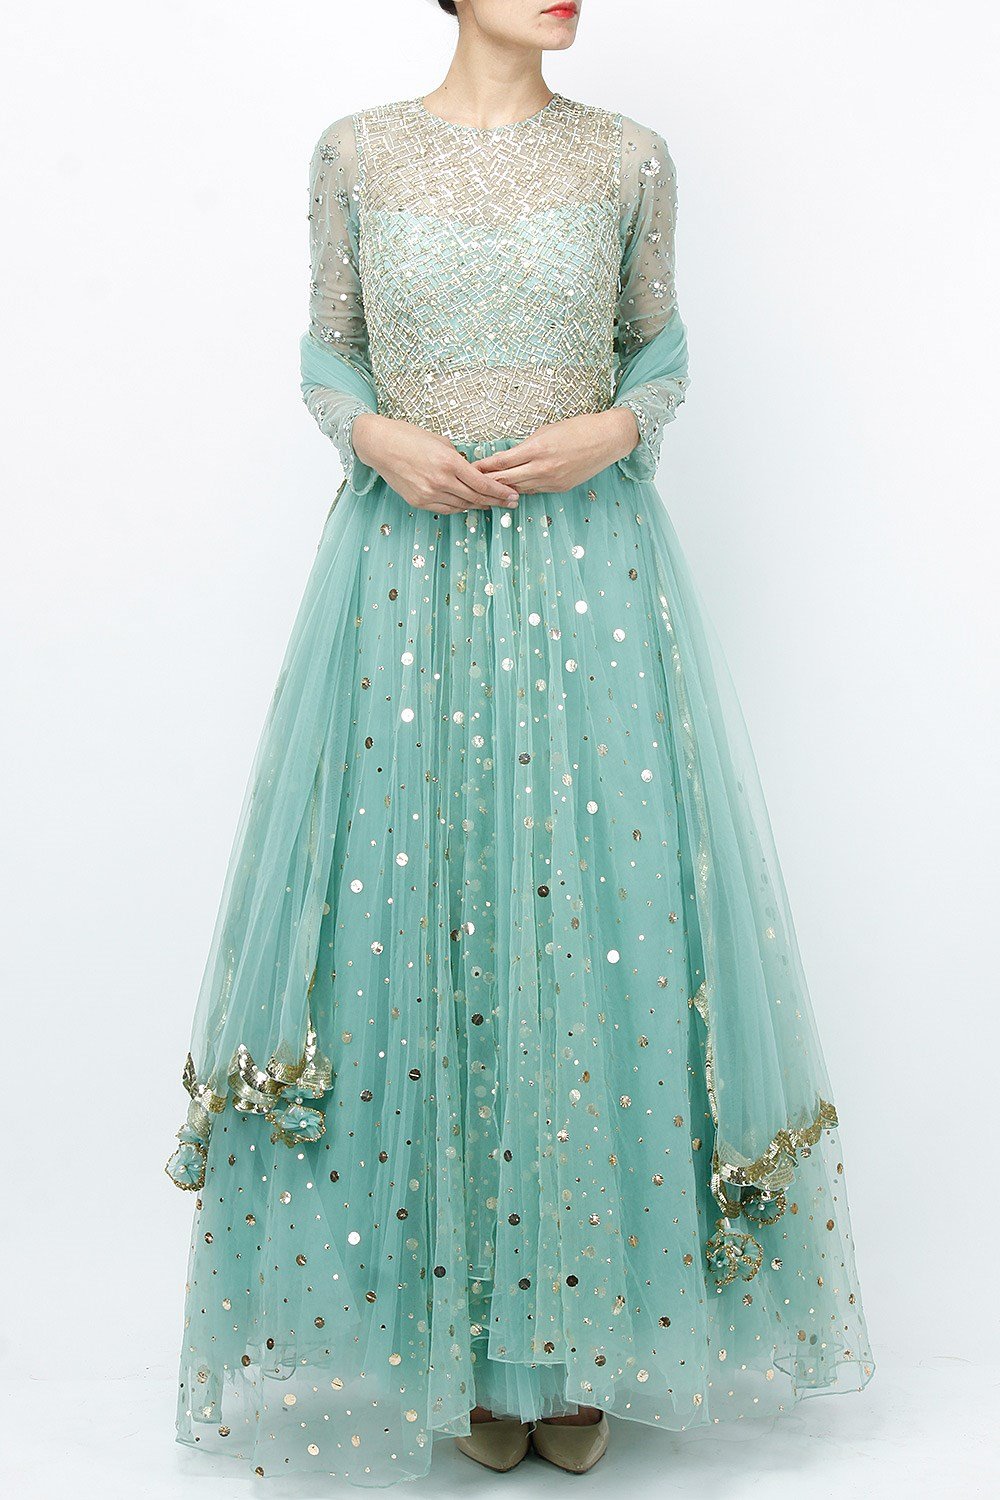 Buy Sky Blue Embroidered Anarkali Suit Online - RI.Ritu Kumar International  Store View